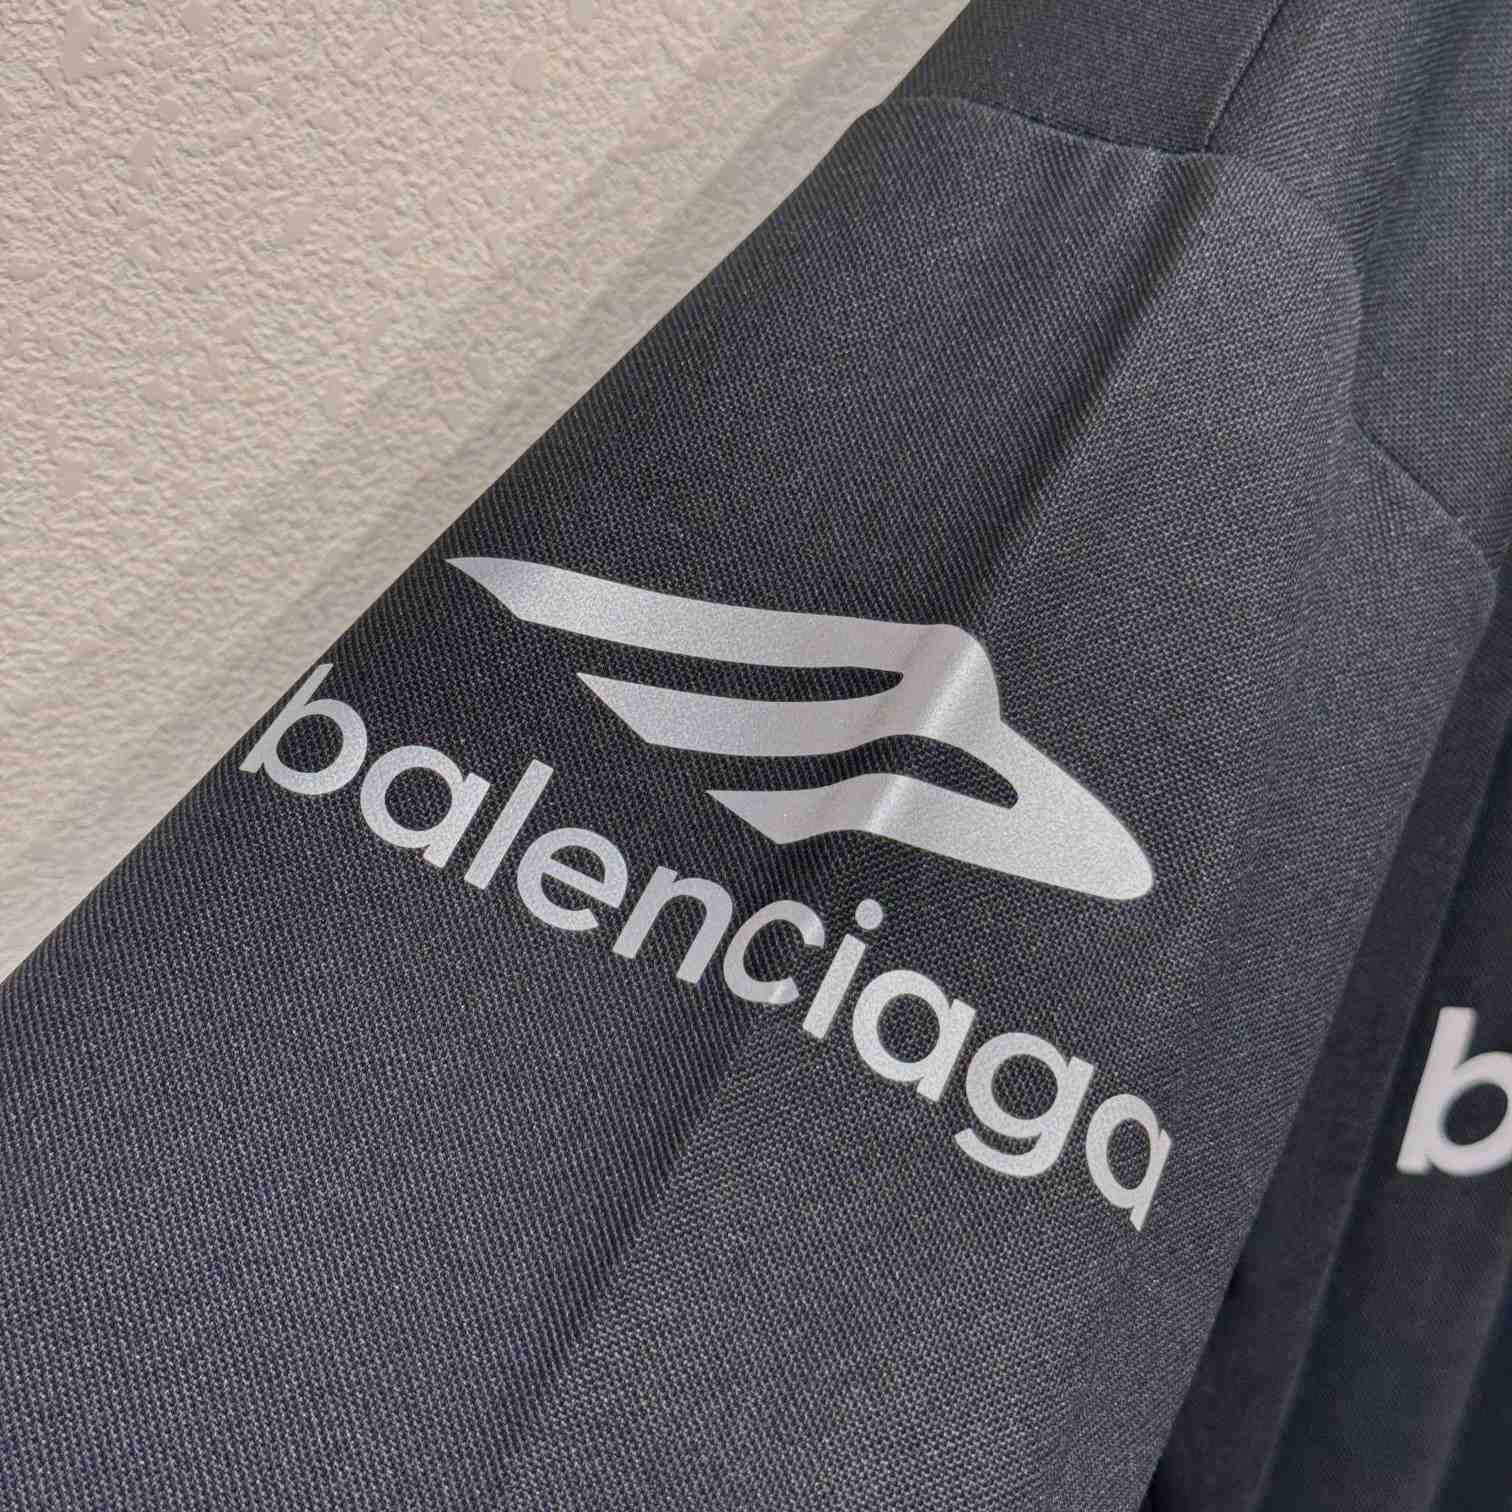 Balenciaga 3B Sports Icon Ski Long Sleeve T-Shirt Large Fit In Black  - DesignerGu